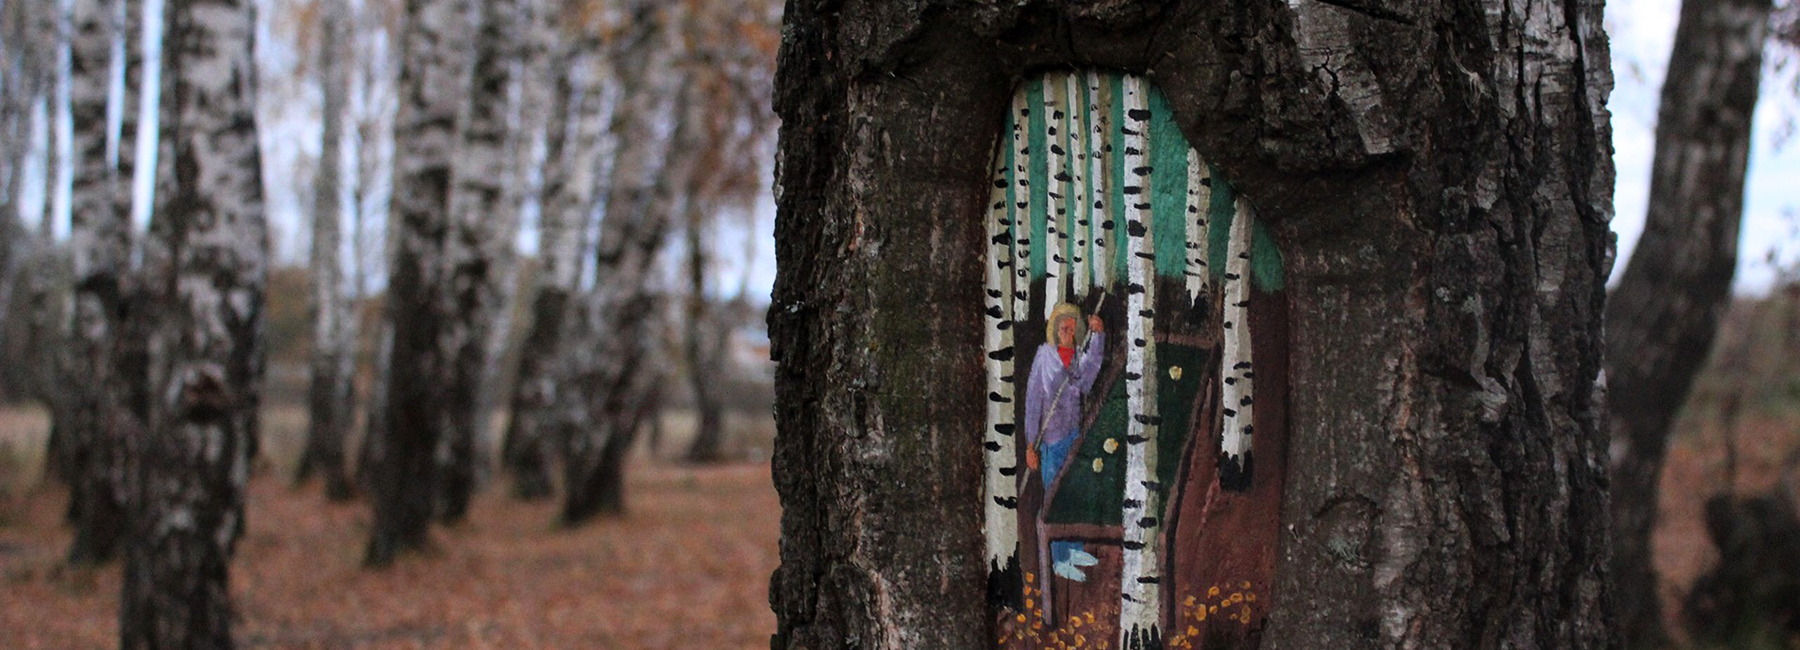 dudnikova eugene paints tiny fantastical scenes on trees